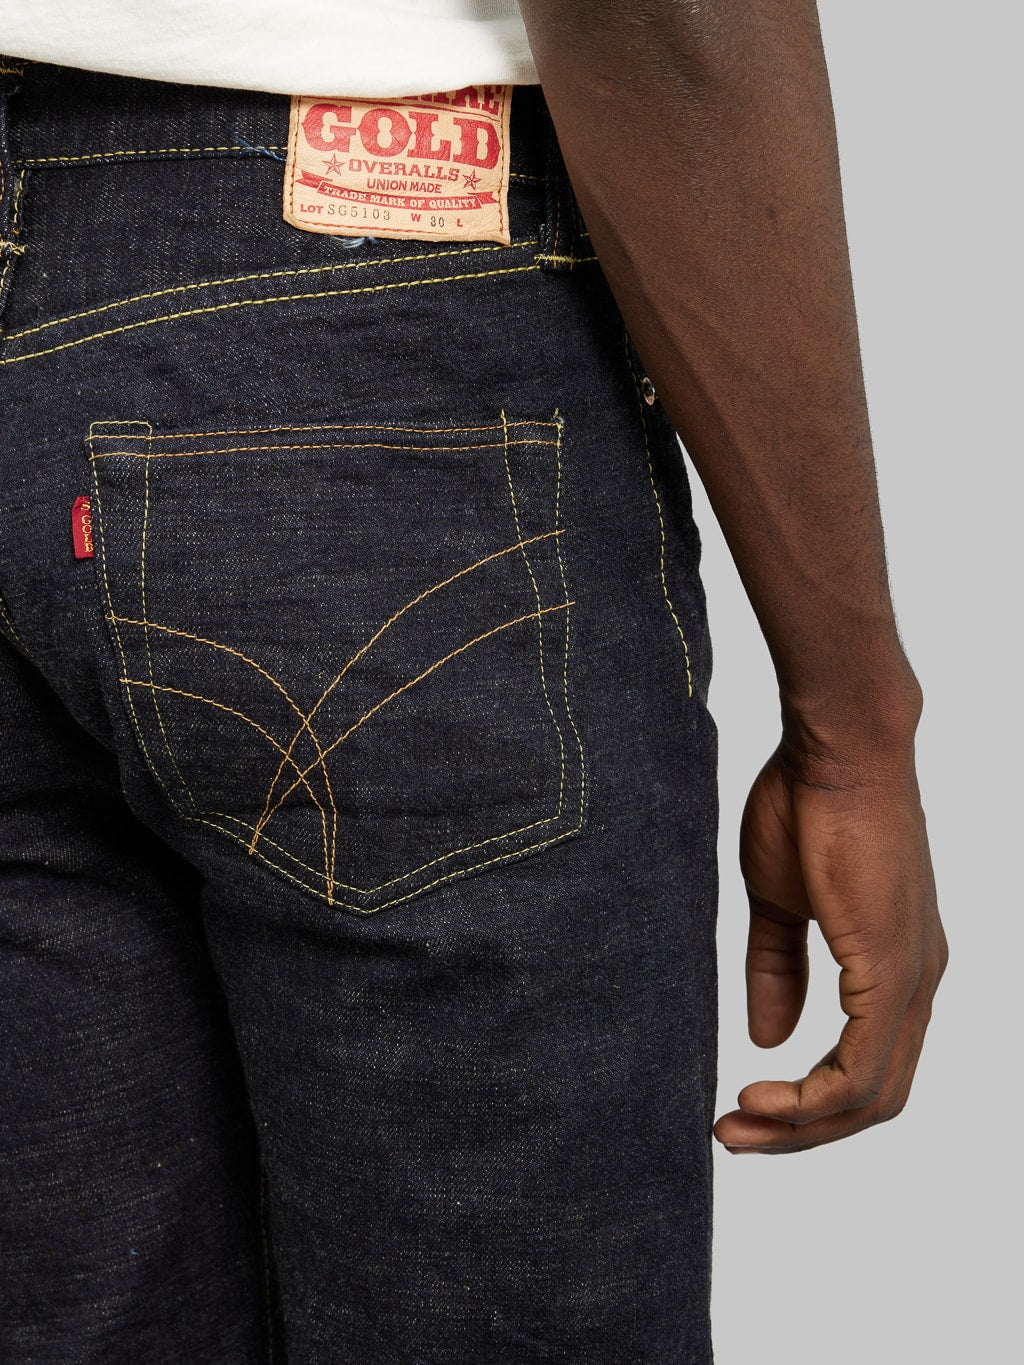 The Strike Gold 5103 Slub Grey Weft regular Straight Jeans back pocket